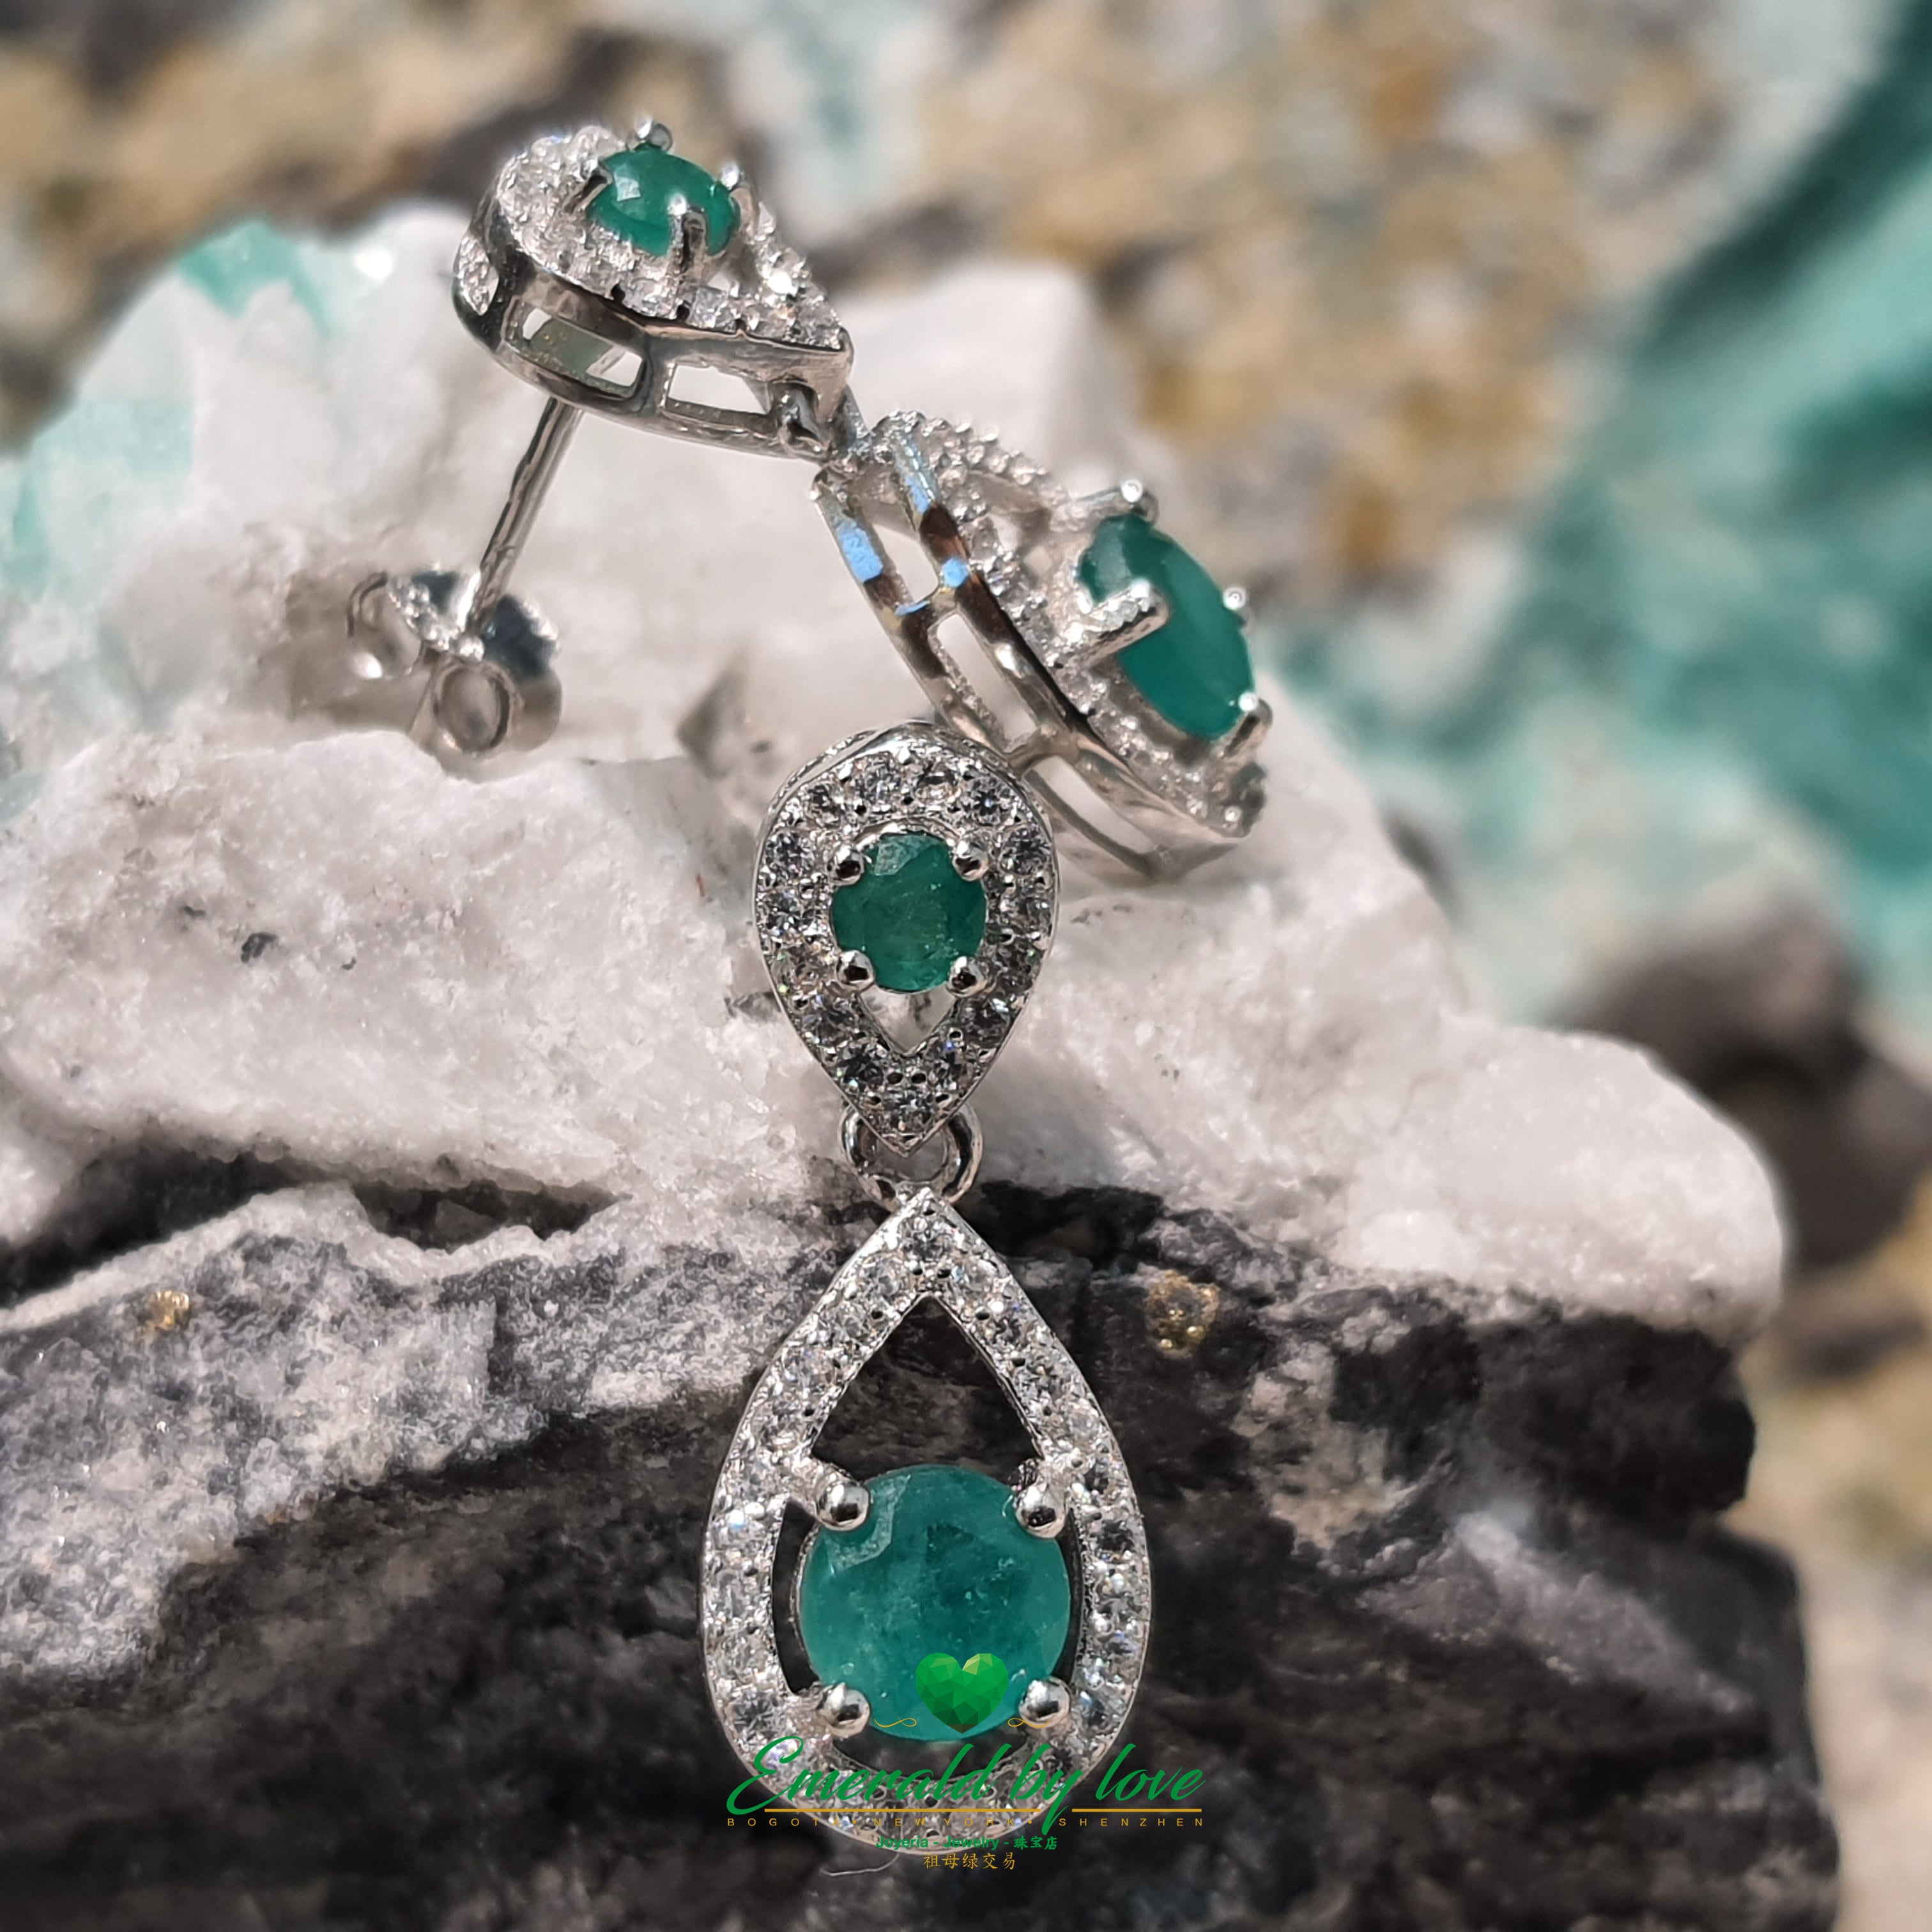 Luxury 925 Sterling Silver Round Colombian Emerald Earrings